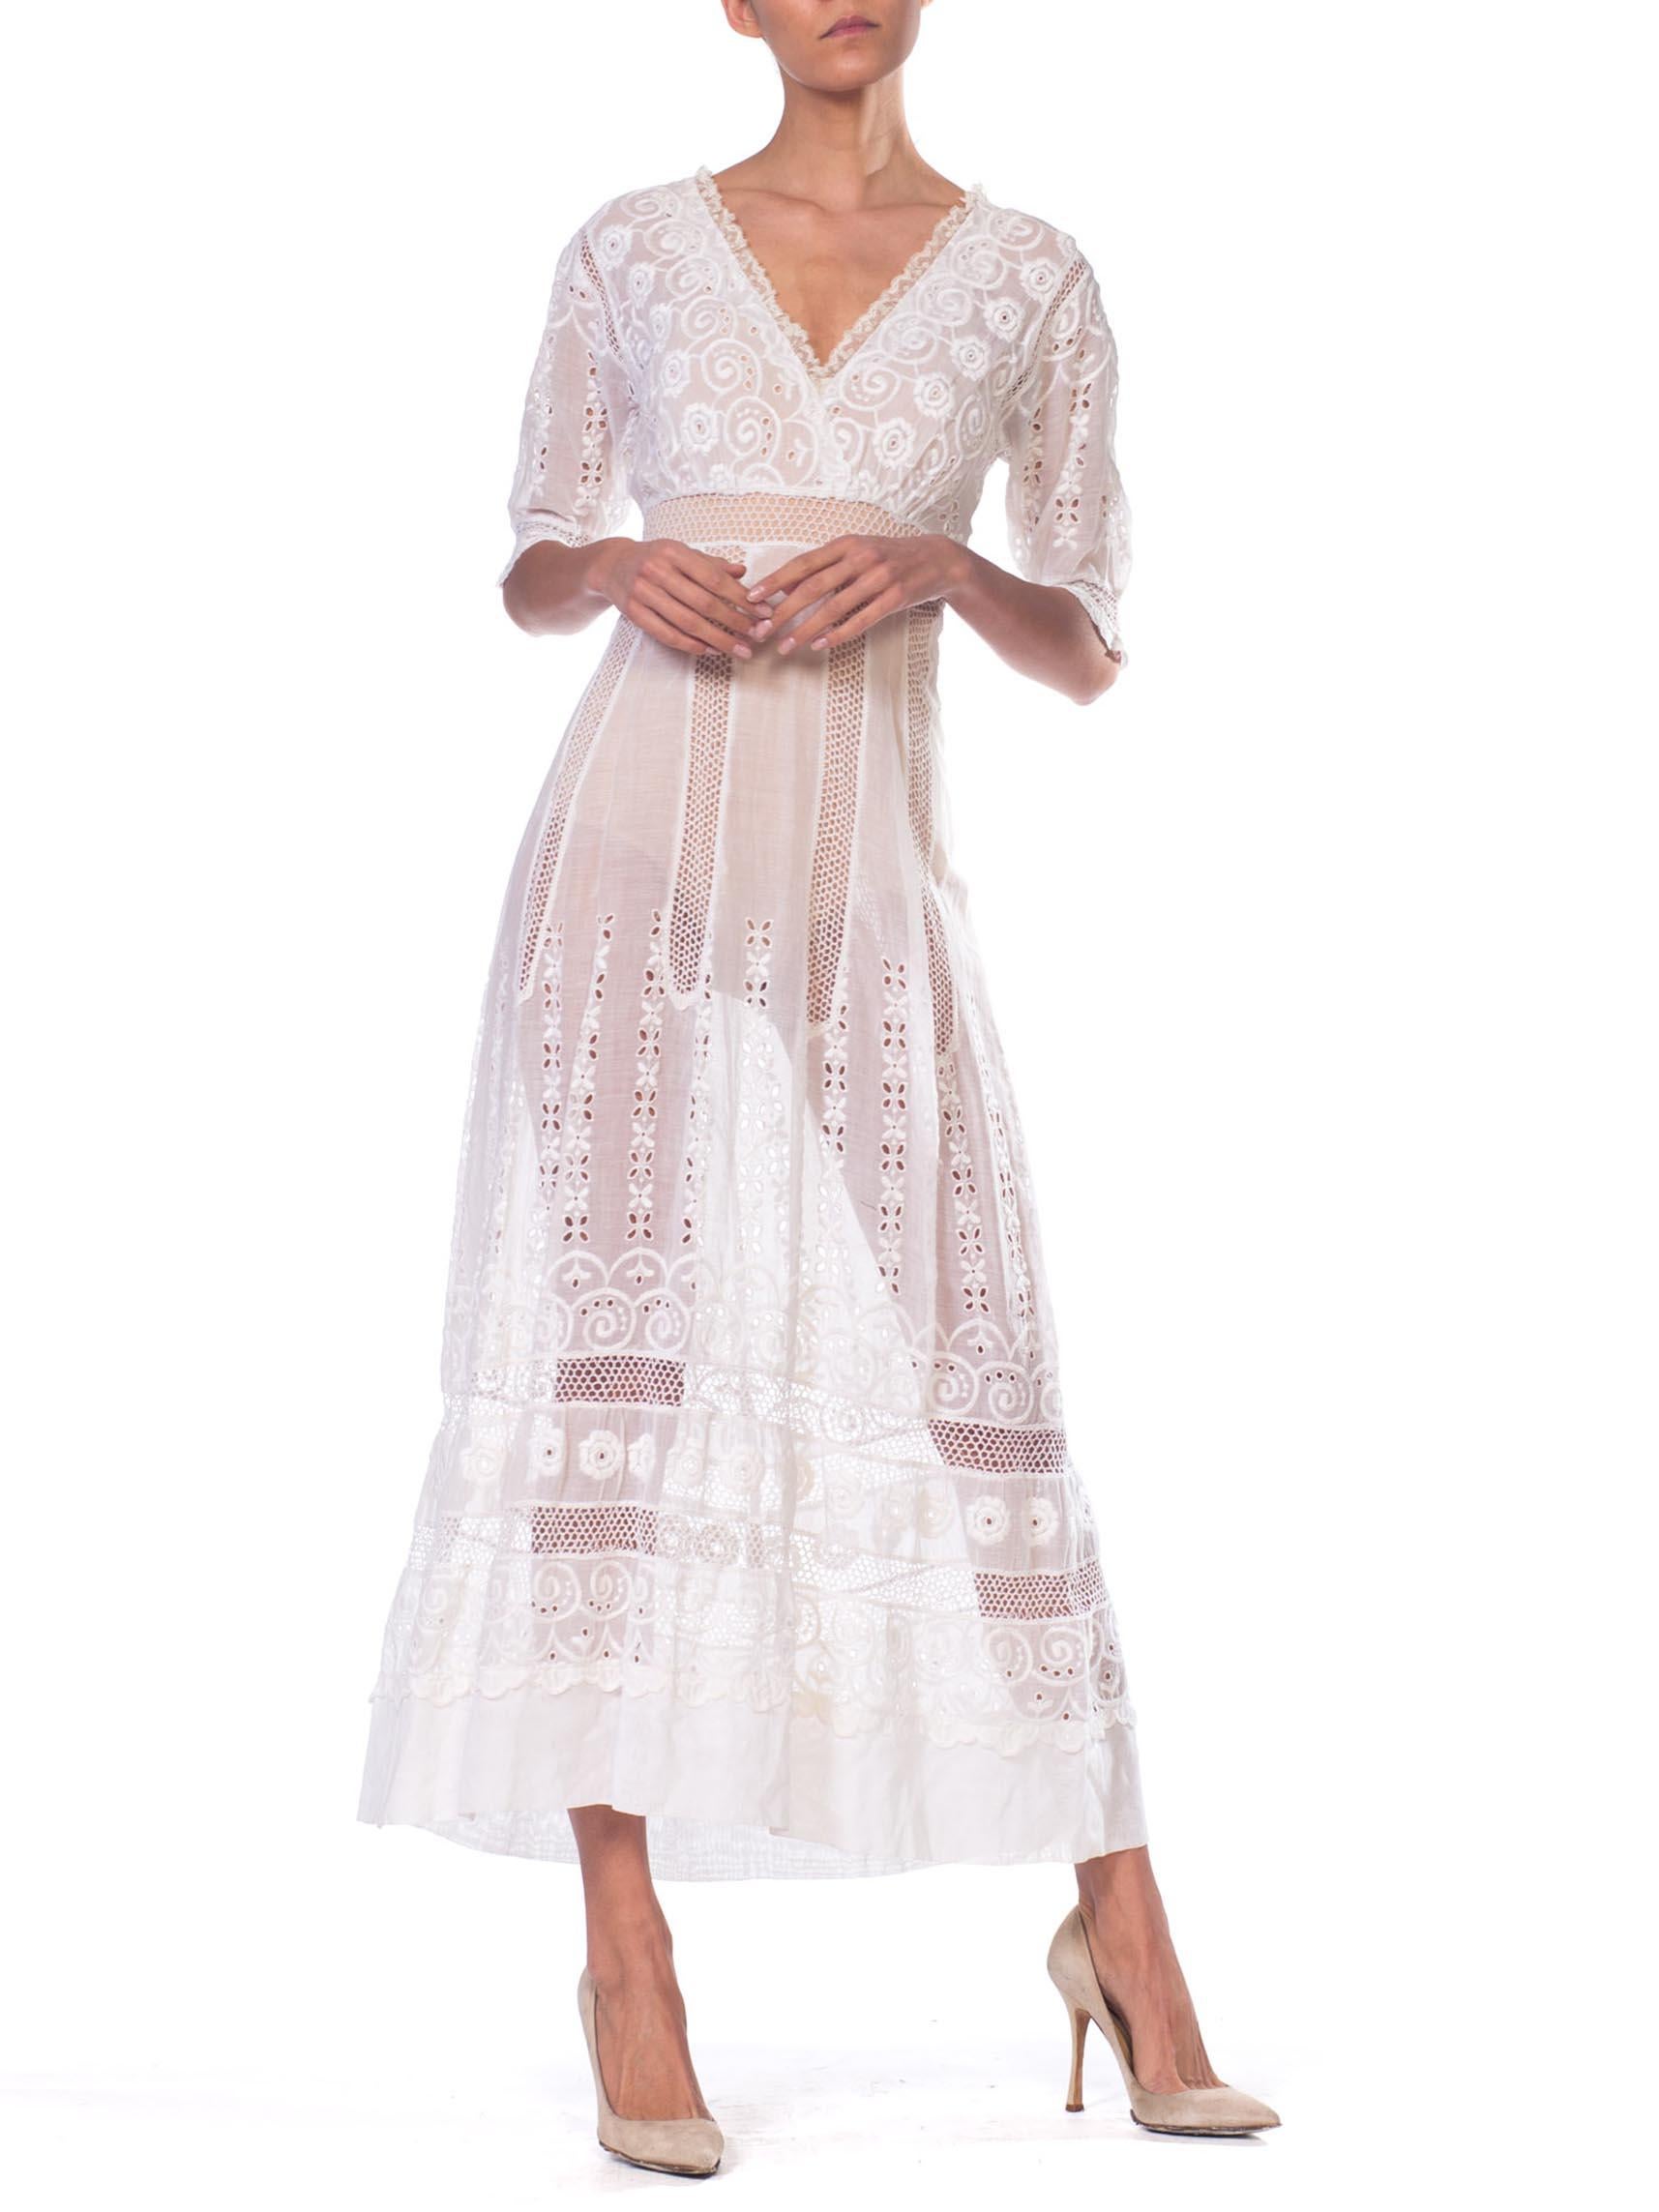 Edwardian Embroidered Organic White Cotton & Lace Tea Dress 